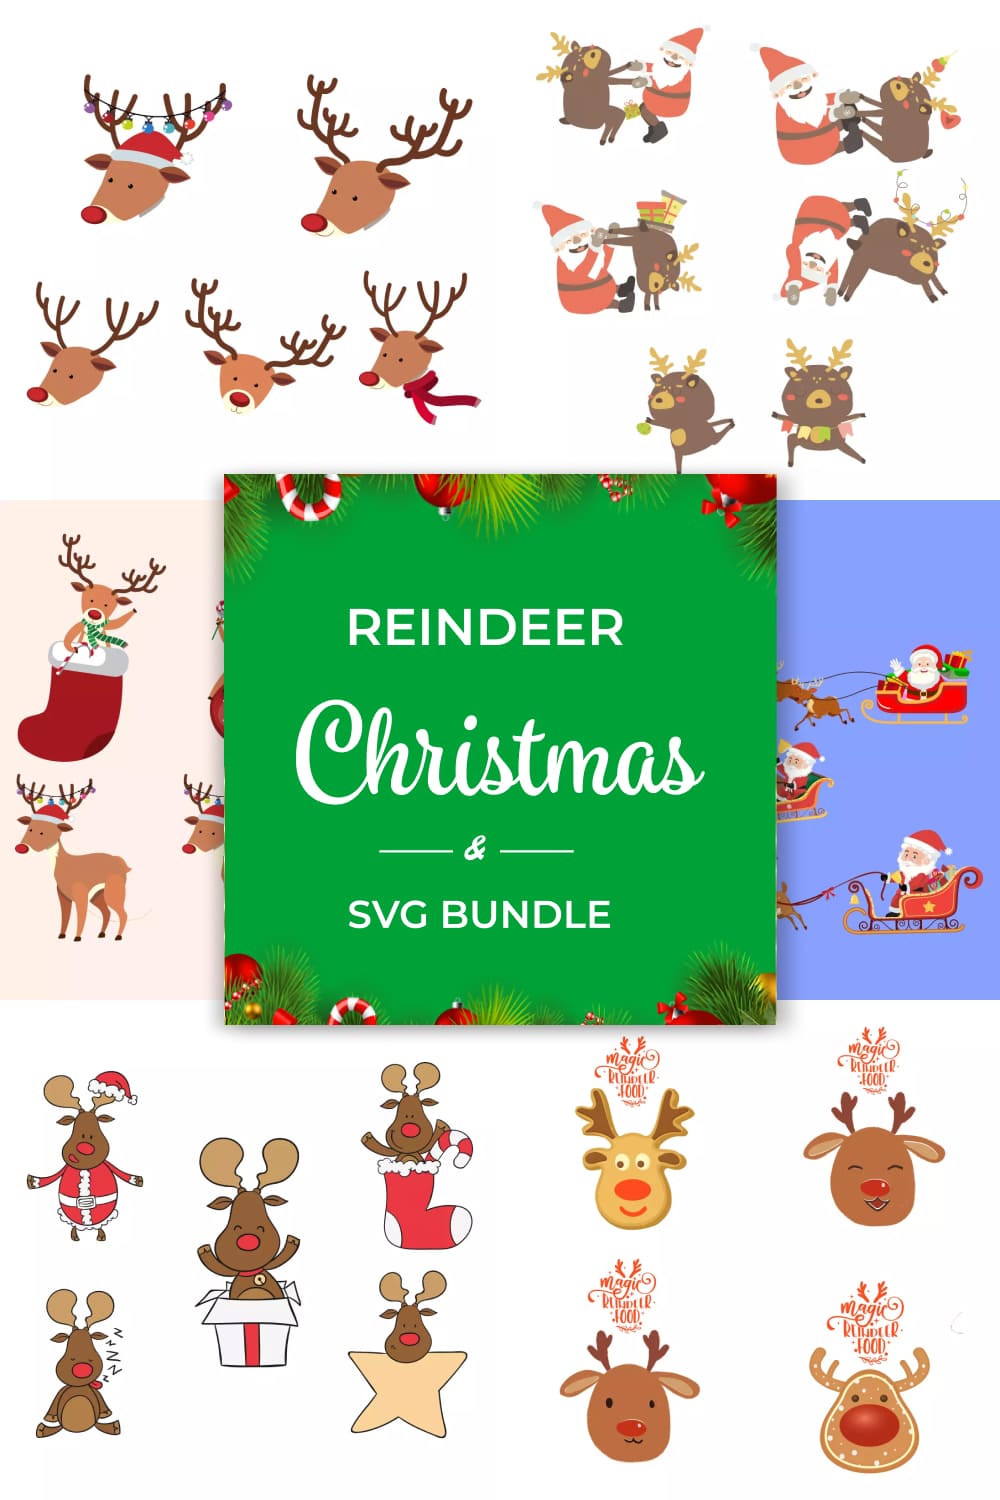 Christmas Reindeer SVG Bundle - pinterest image preview.